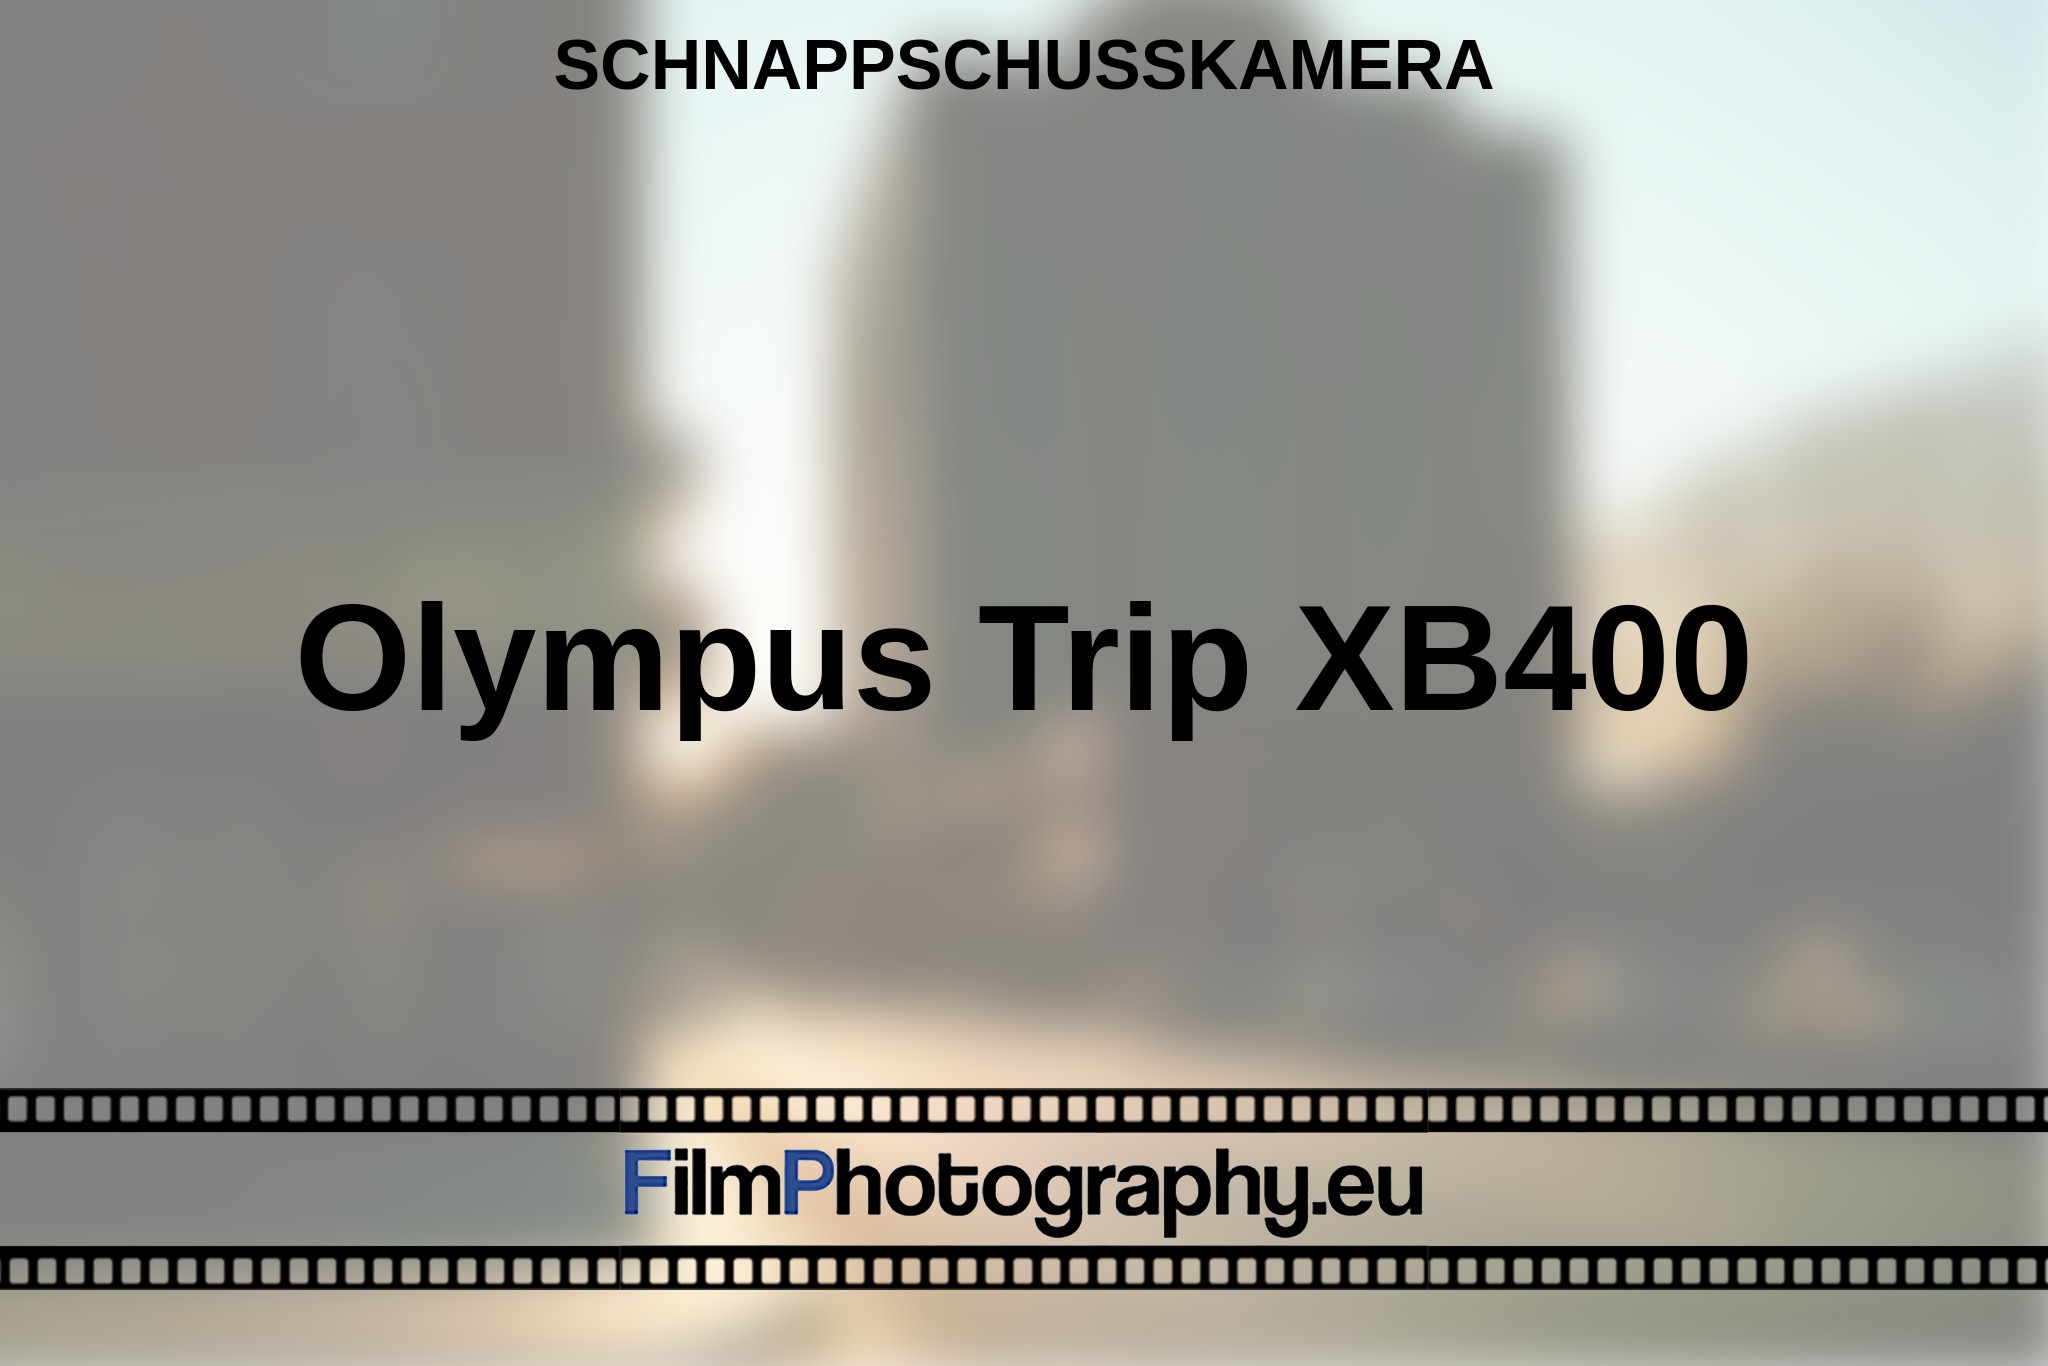 olympus-trip-xb400-schnappschusskamera-bnv.jpg